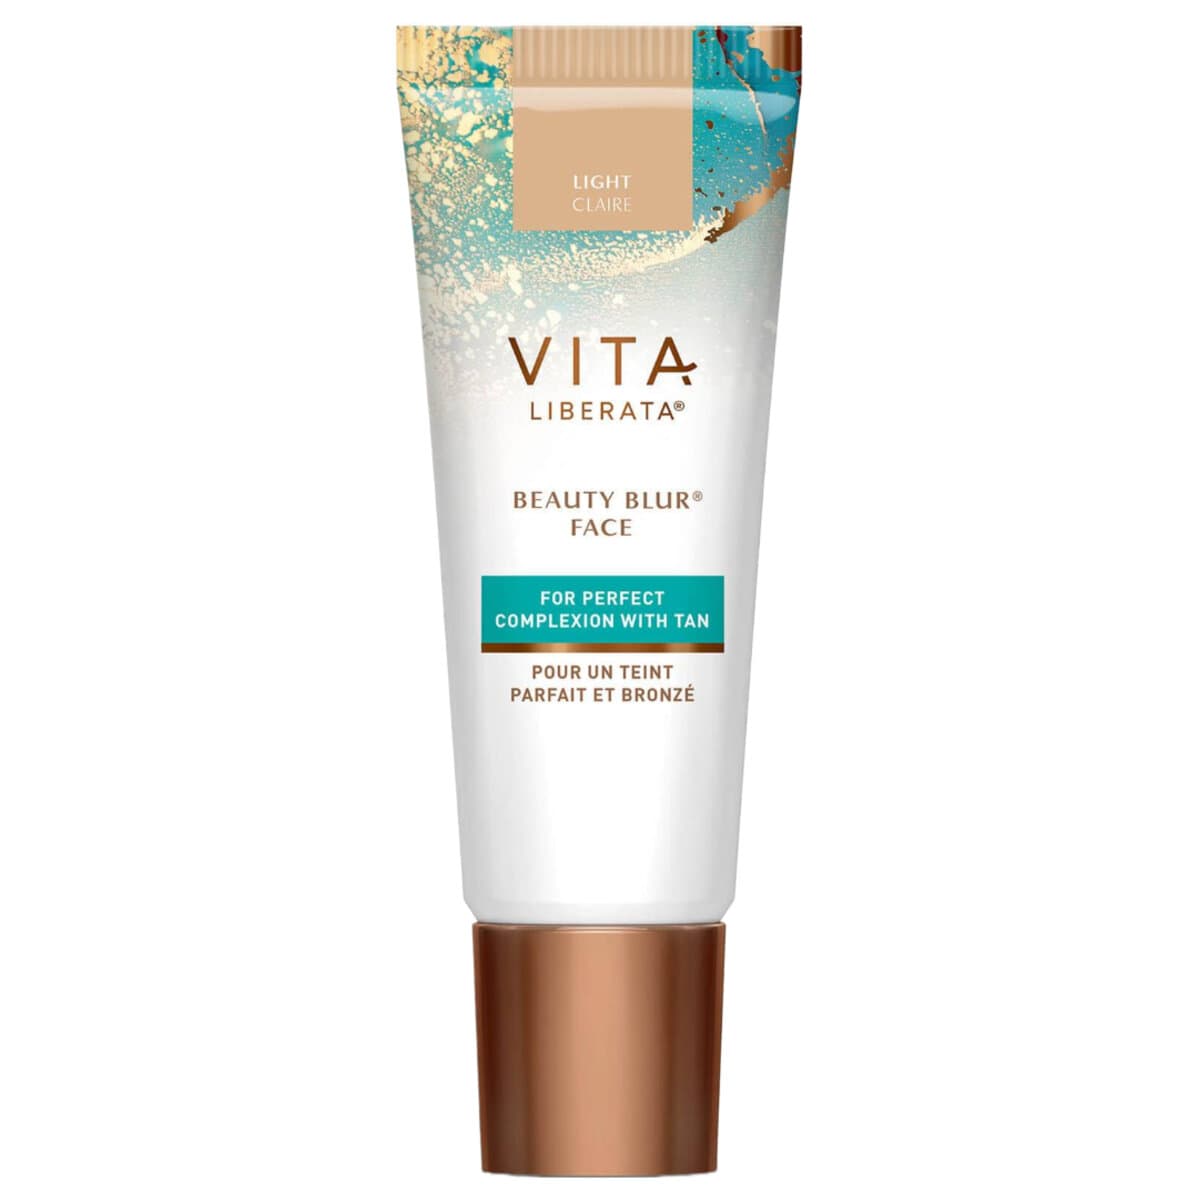 Vita Liberata Beauty Blur Face Light with tan - Beauty Guru